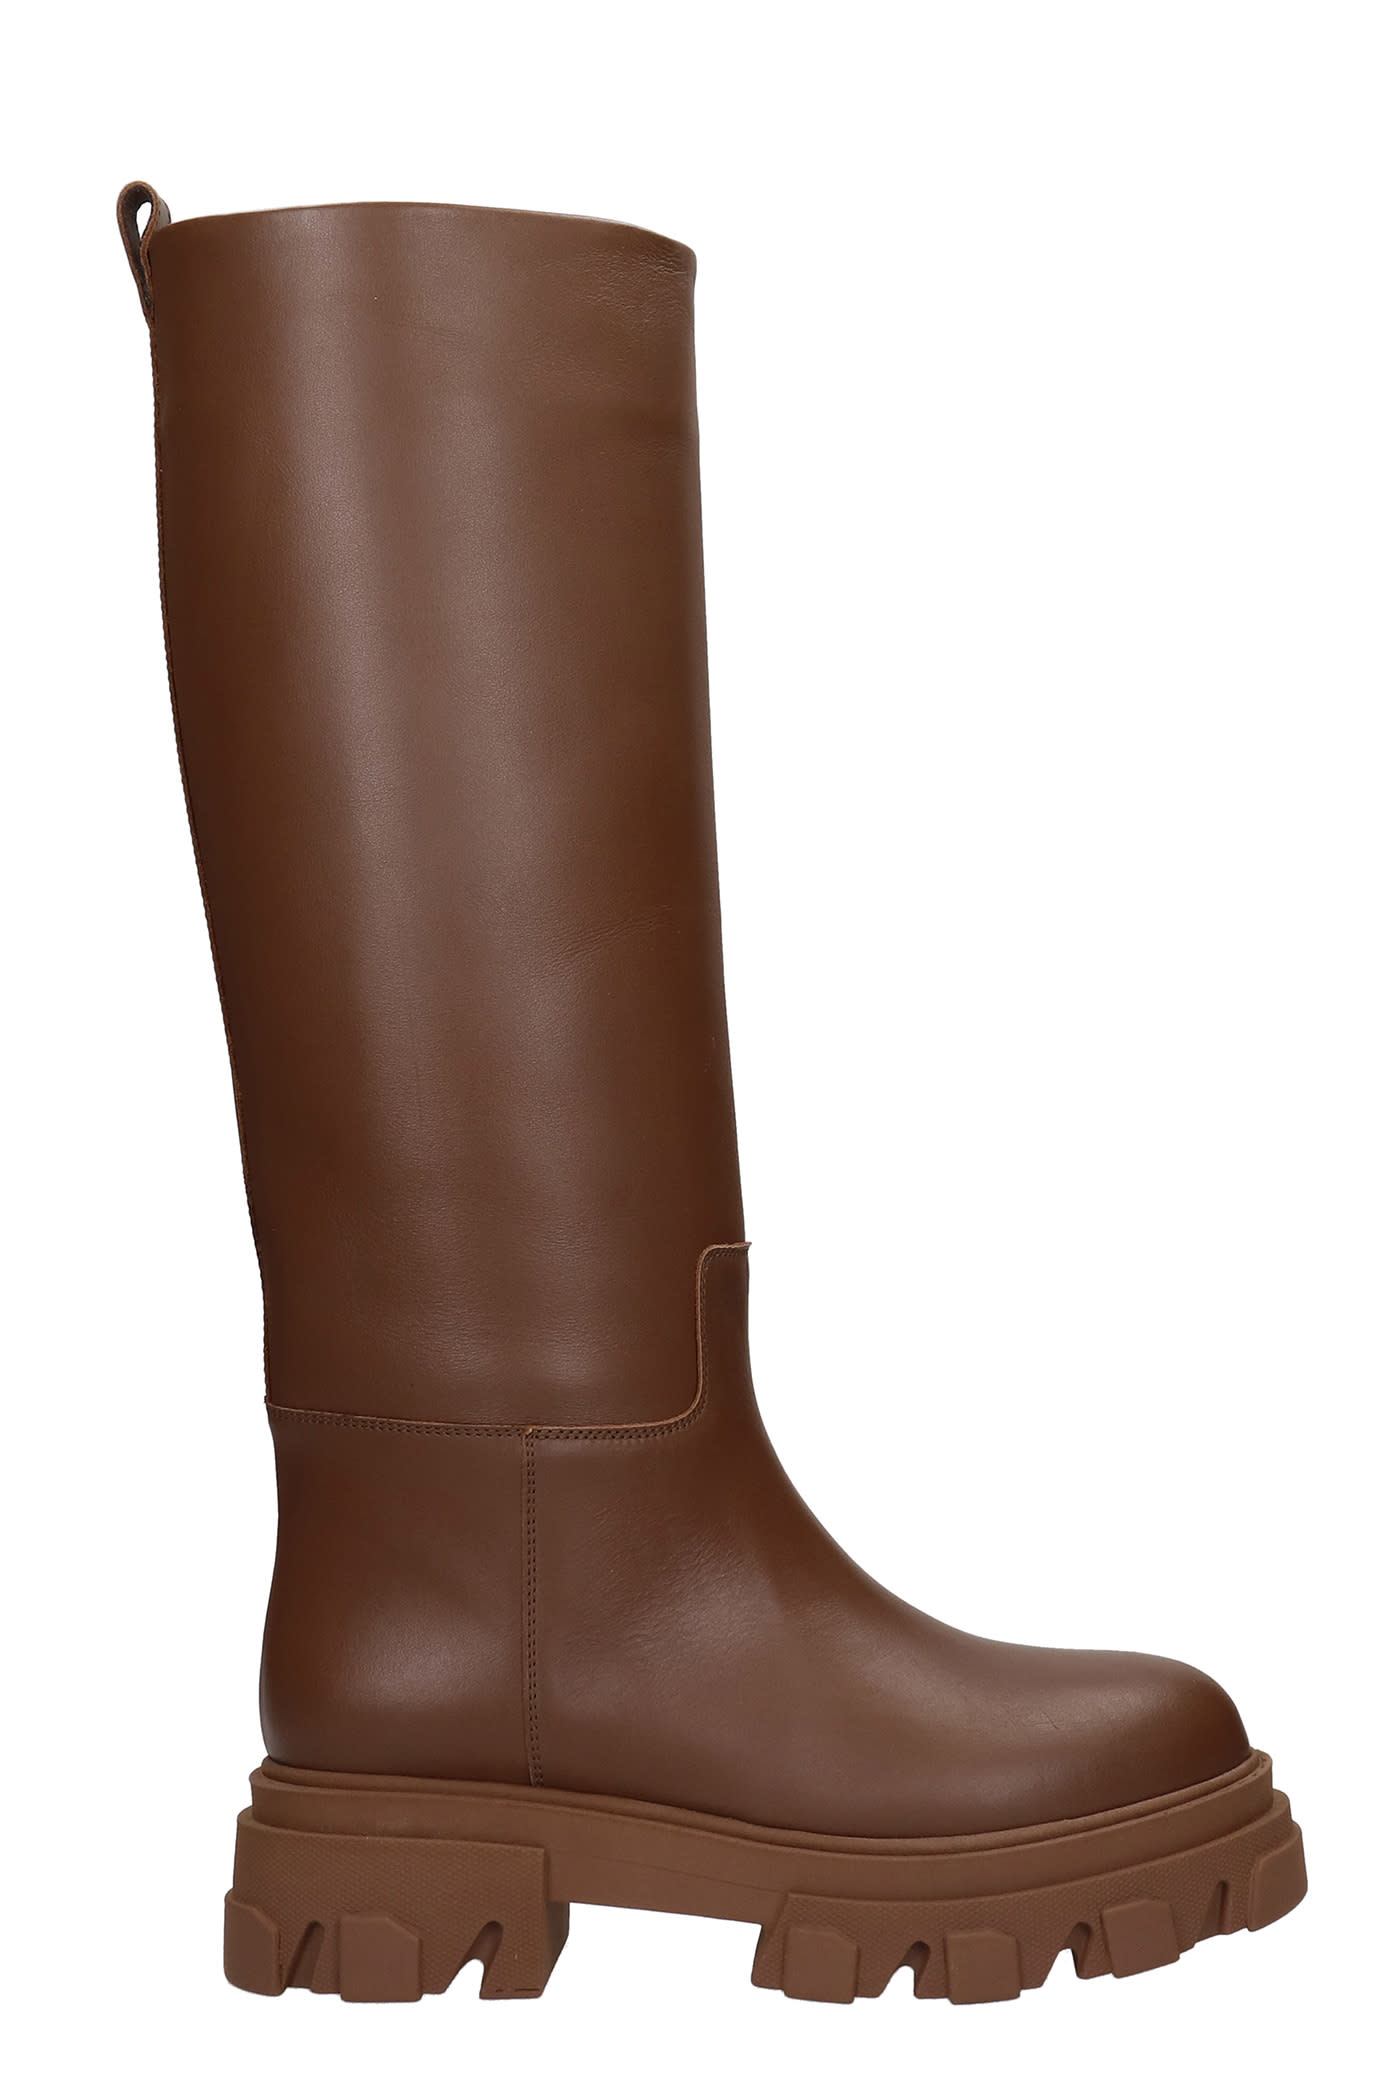 Gia X Pernille Teisbaek Perni 07 Low Heels Boots In Brown Leather